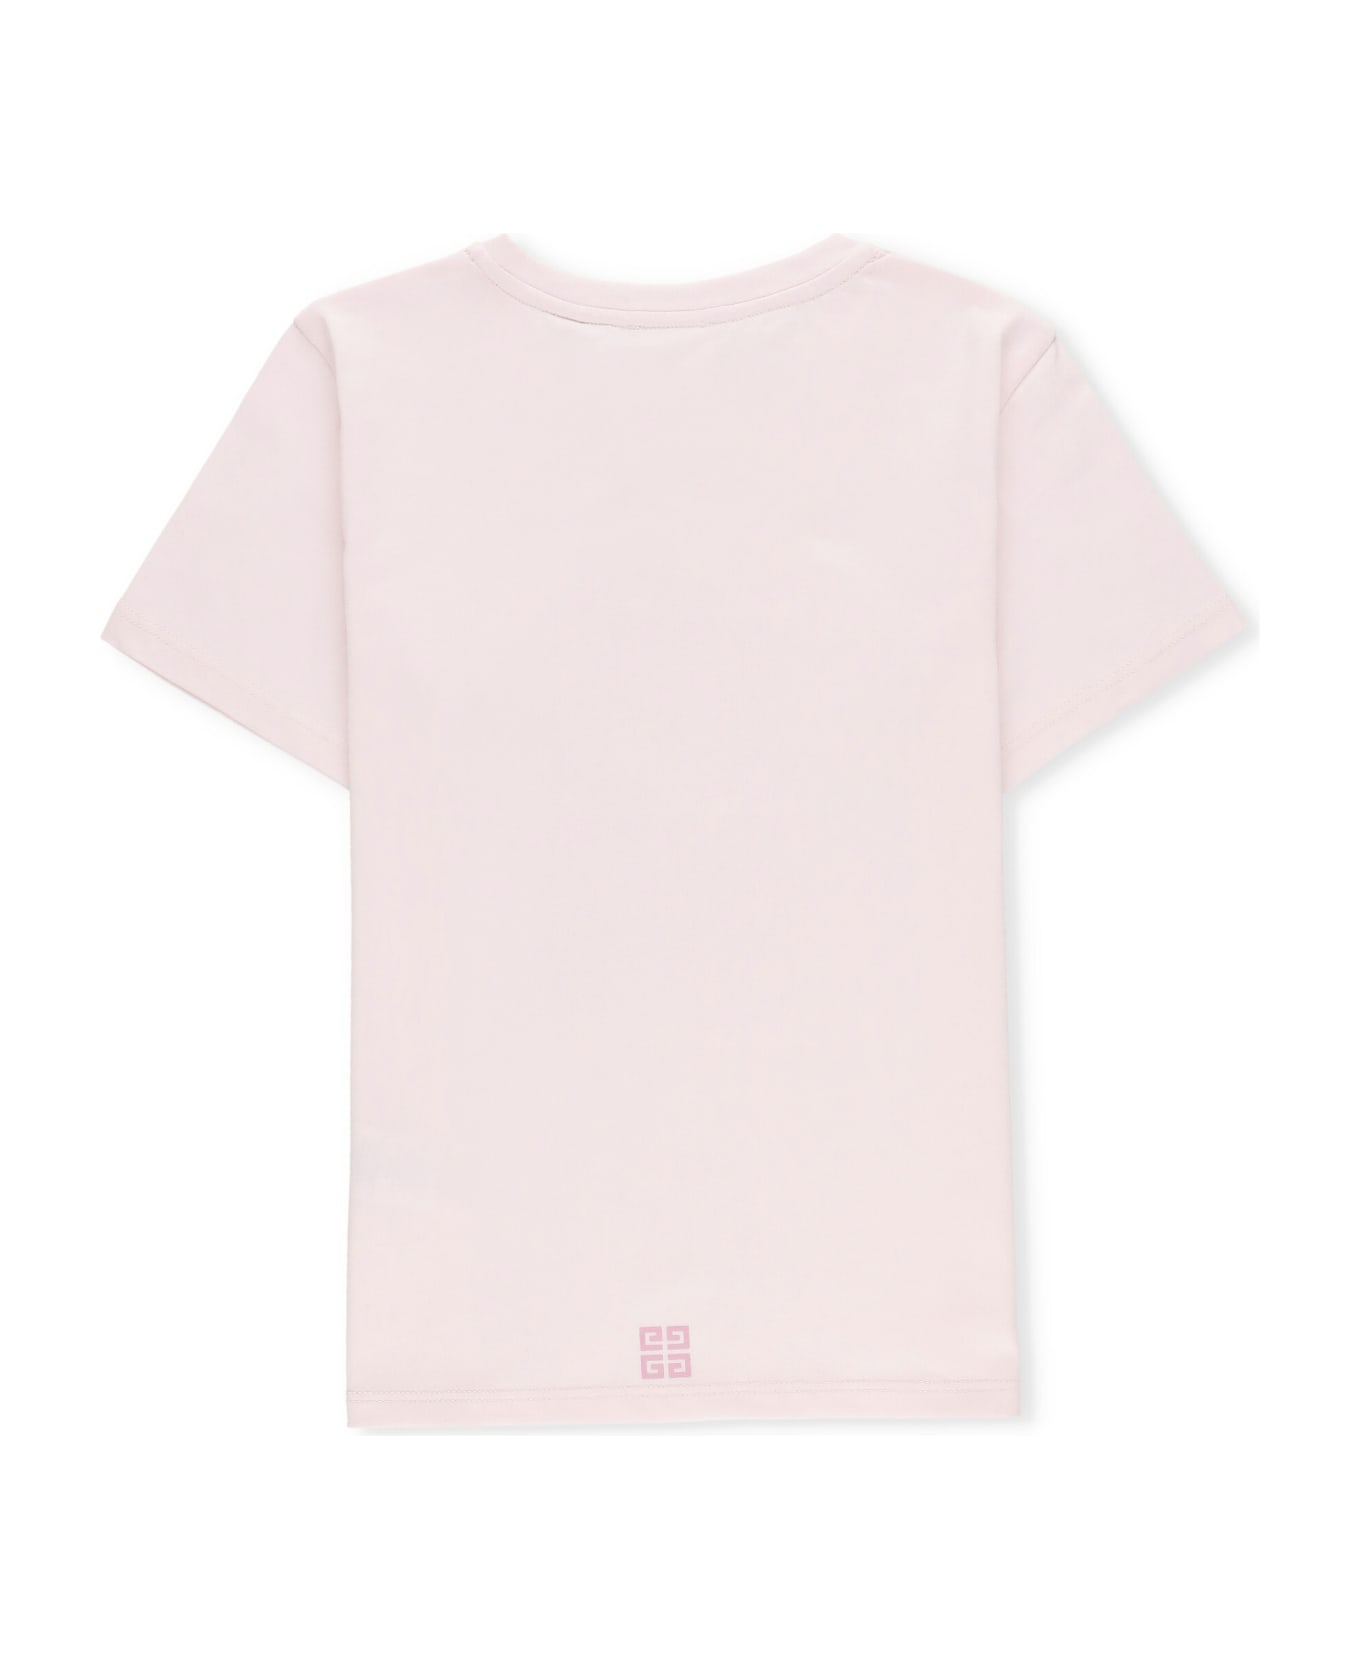 Givenchy T-shirt With Logo - Rosa